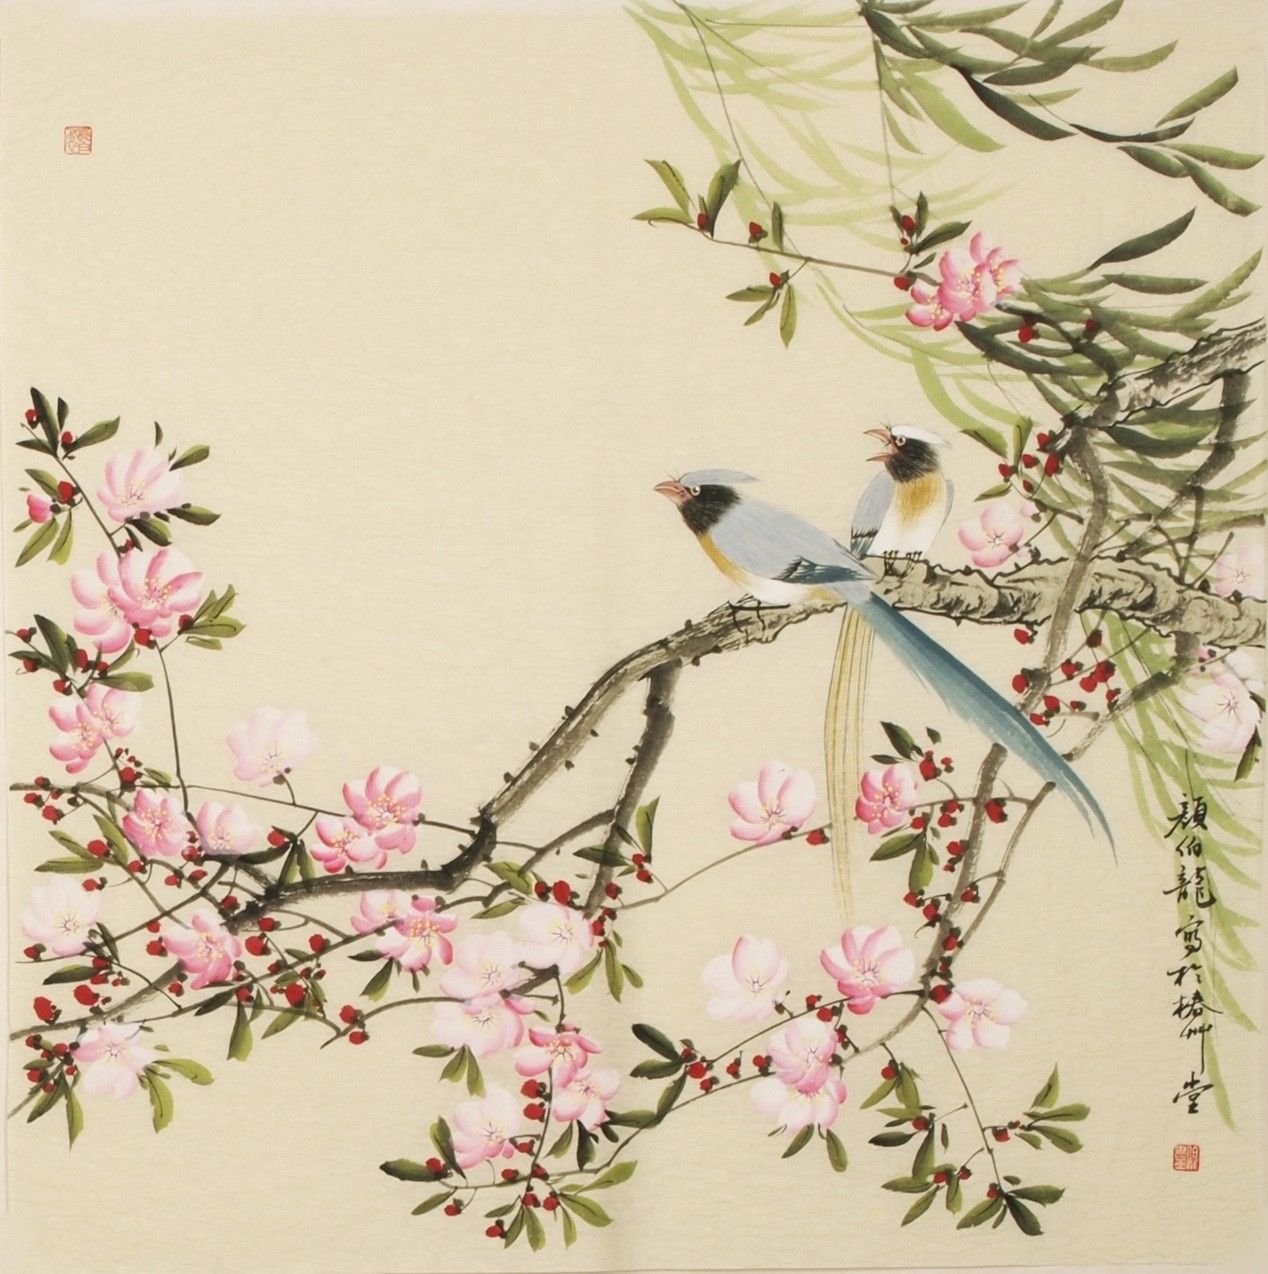 16 птичек на китайском. Ци Байши Сакура. Ласточки Шинуазри. Сакура в стиле гунби. Peach Blossom японская китайская живопись.